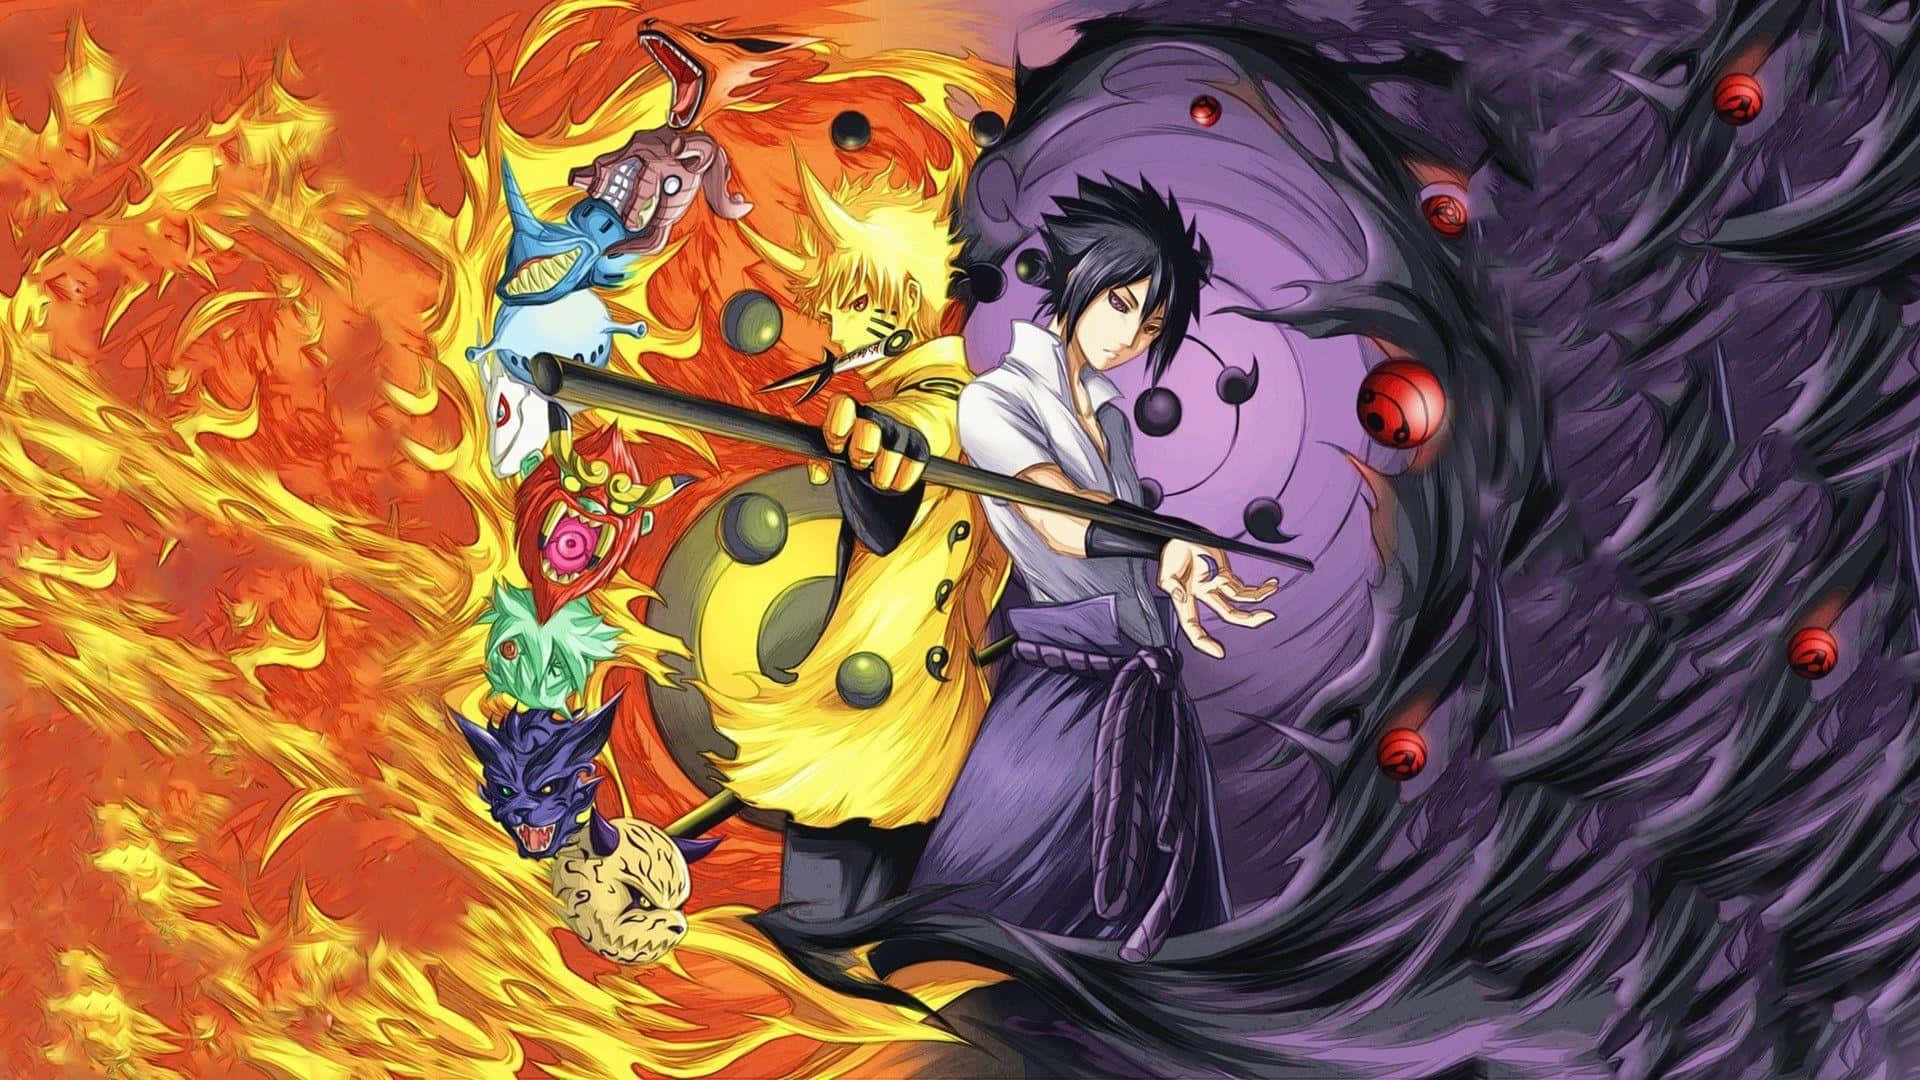 Sasukeund Naruto, Langjährige Rivalen Und Enge Freunde.